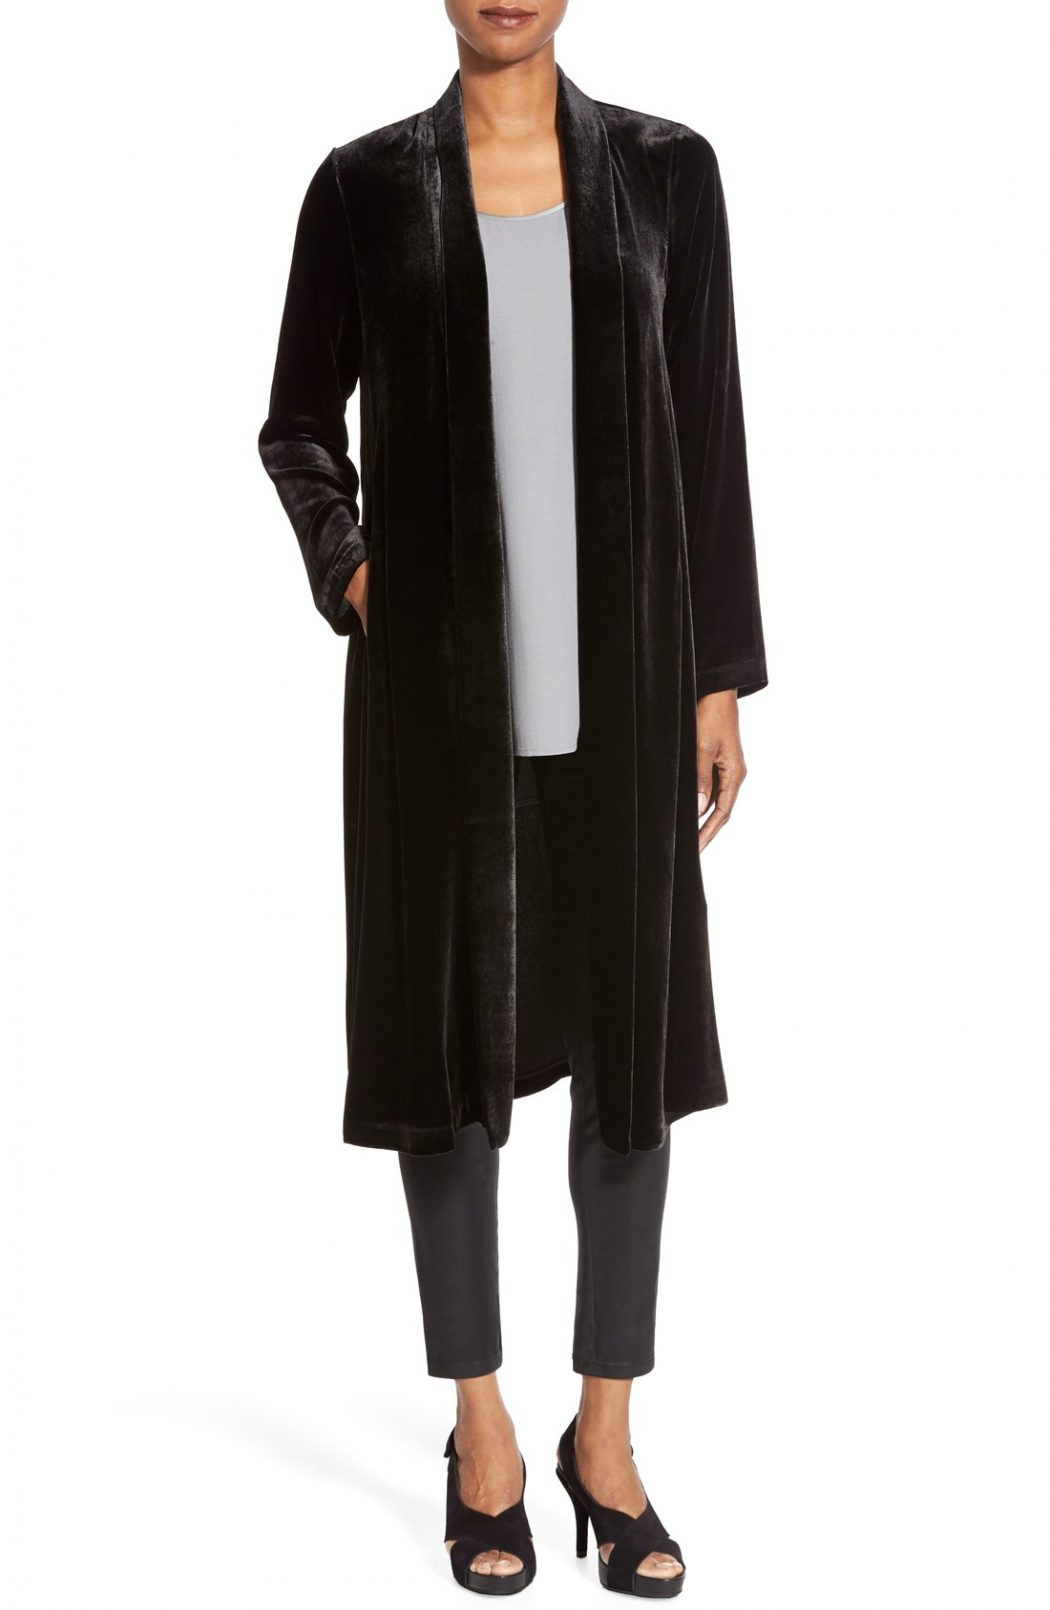 Long Black Coat2 8 Main Winter & Fall Jackets & Coats Trends - 11